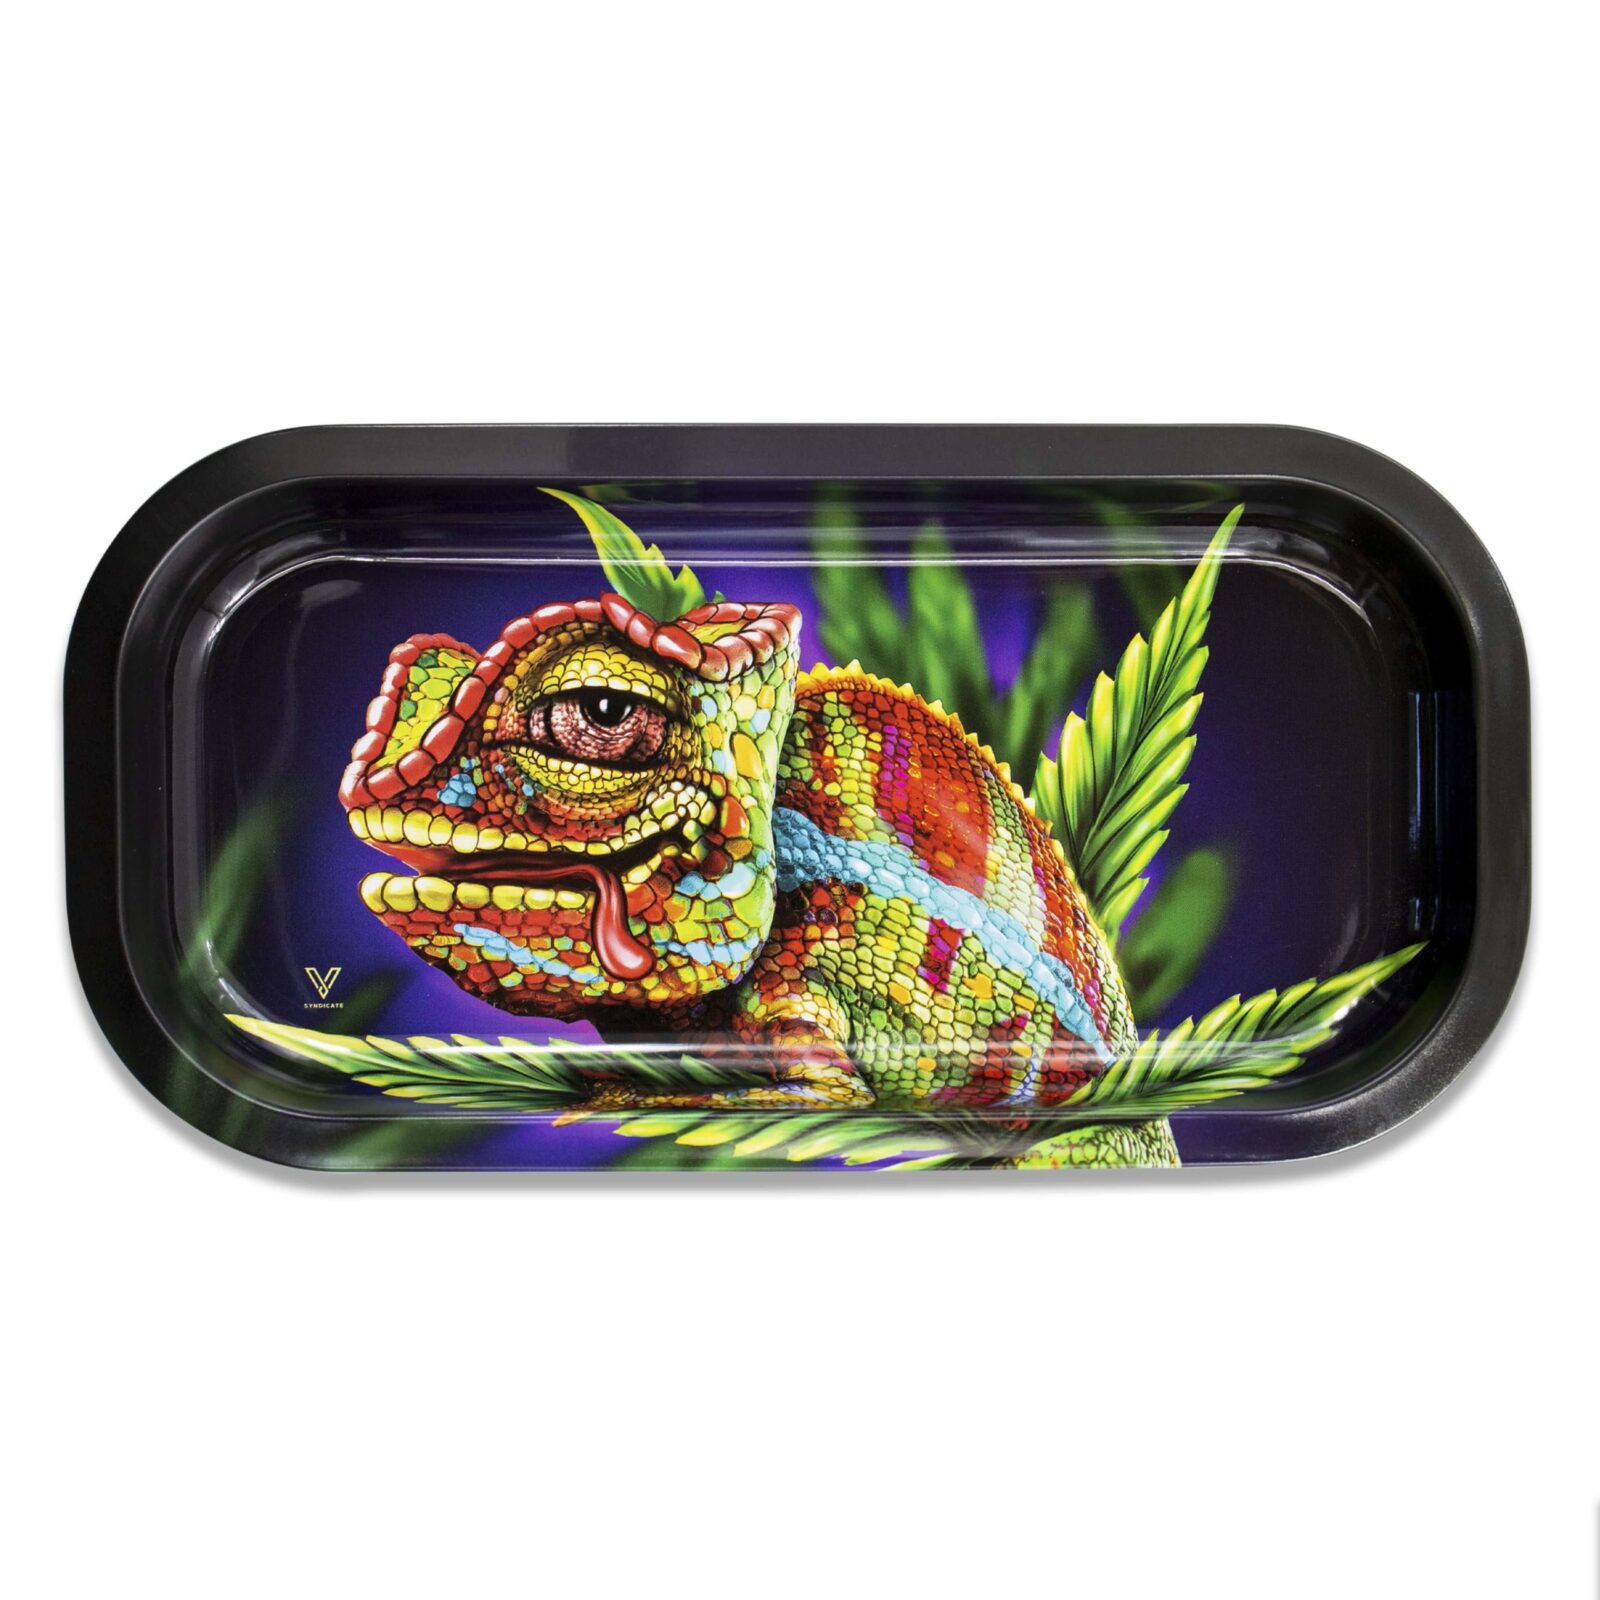 v syndicate chameleon rectangle rolling glass tray image copy